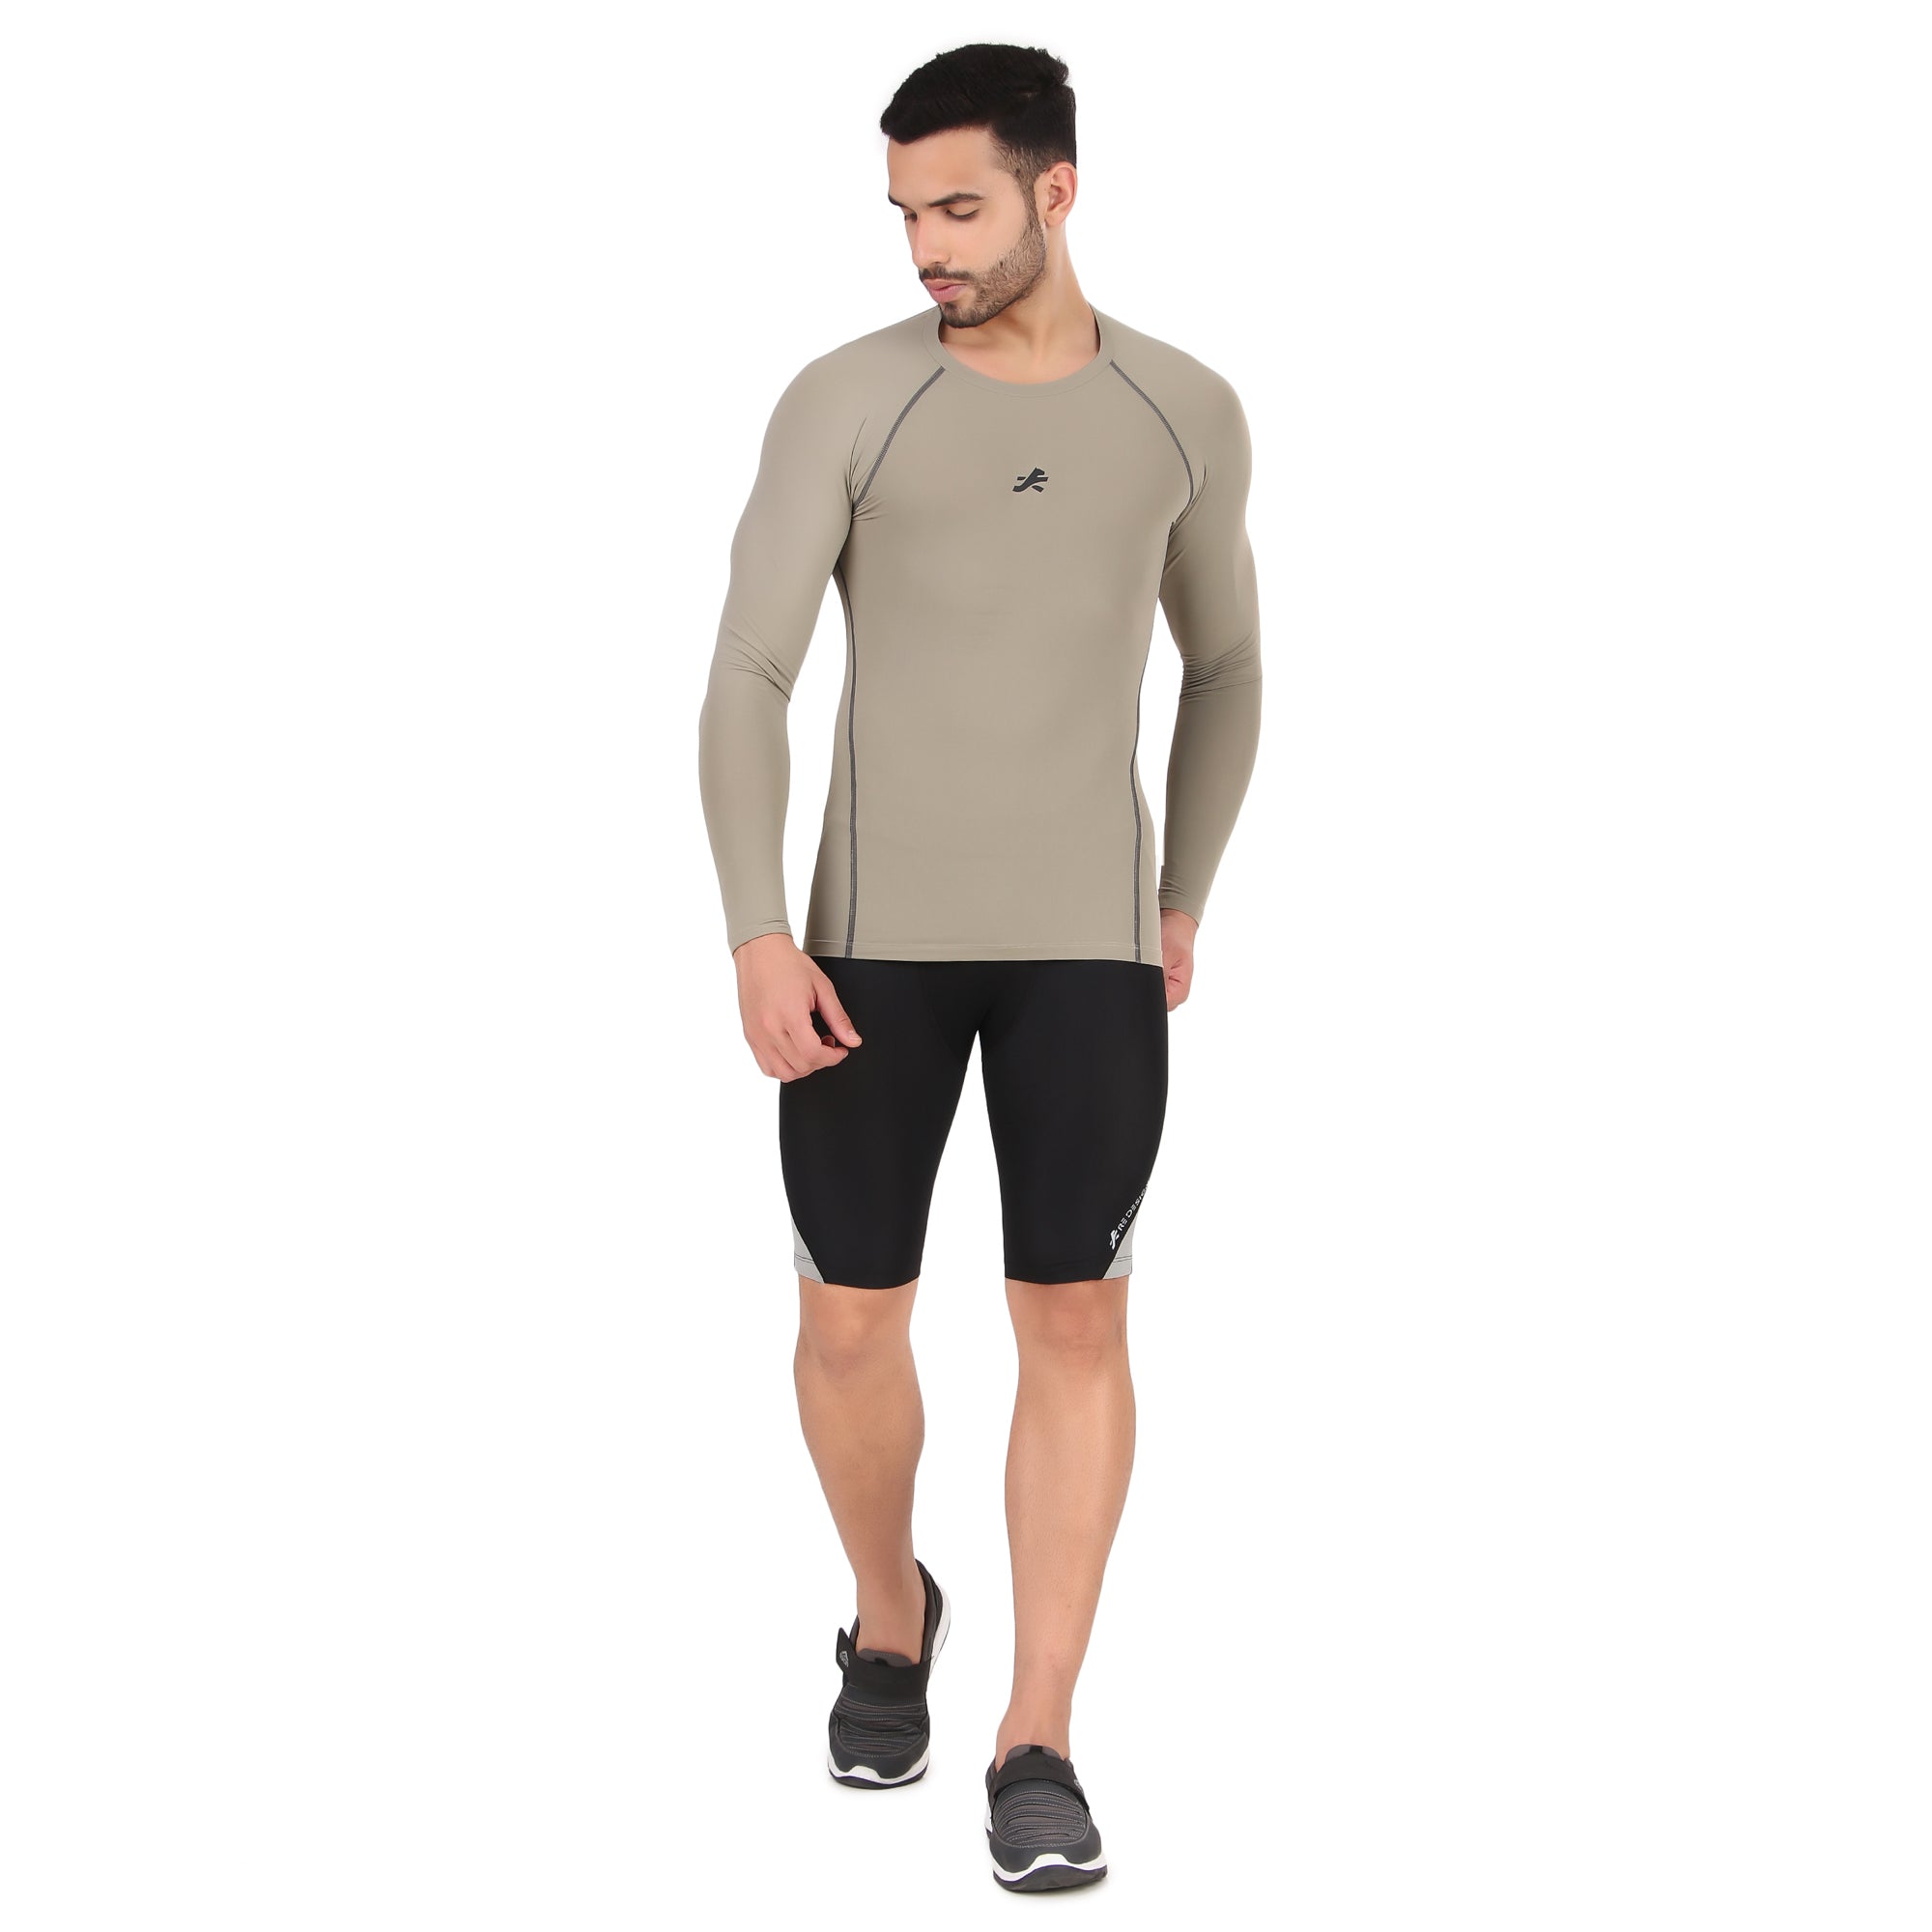 Nylon Compression Tshirt Full Sleeve Tights For Men (Pista)